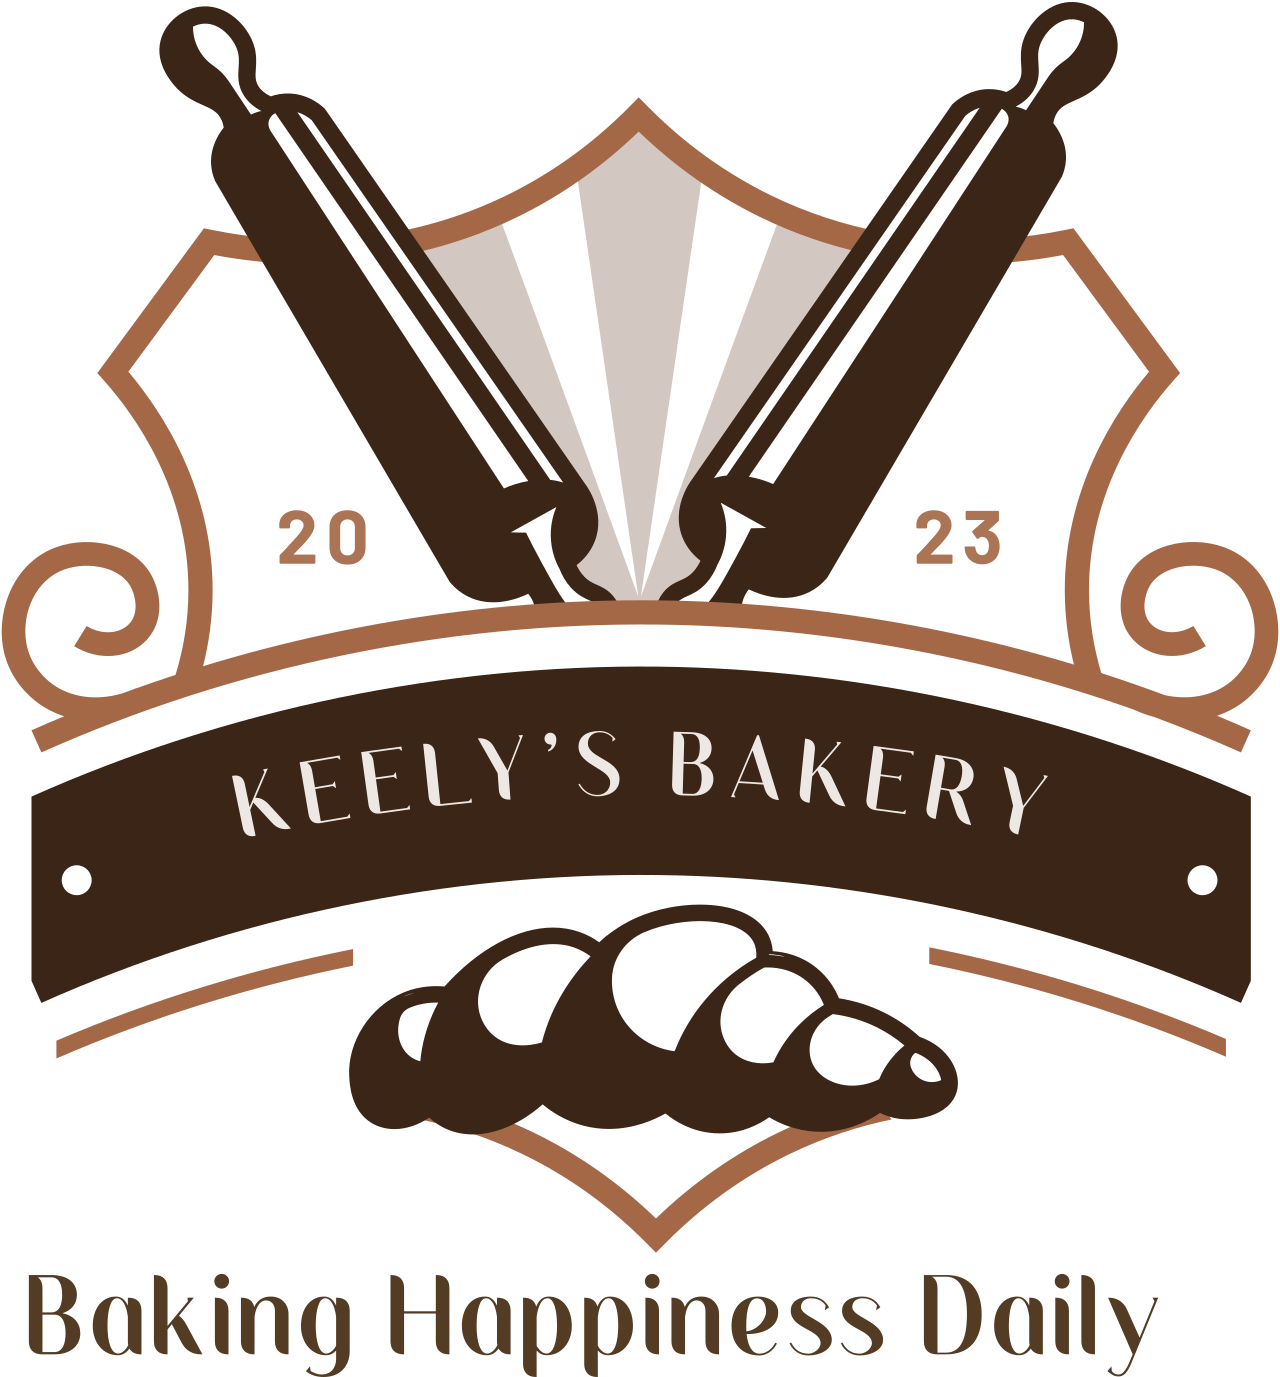 KEELY'S BAKERY's logo